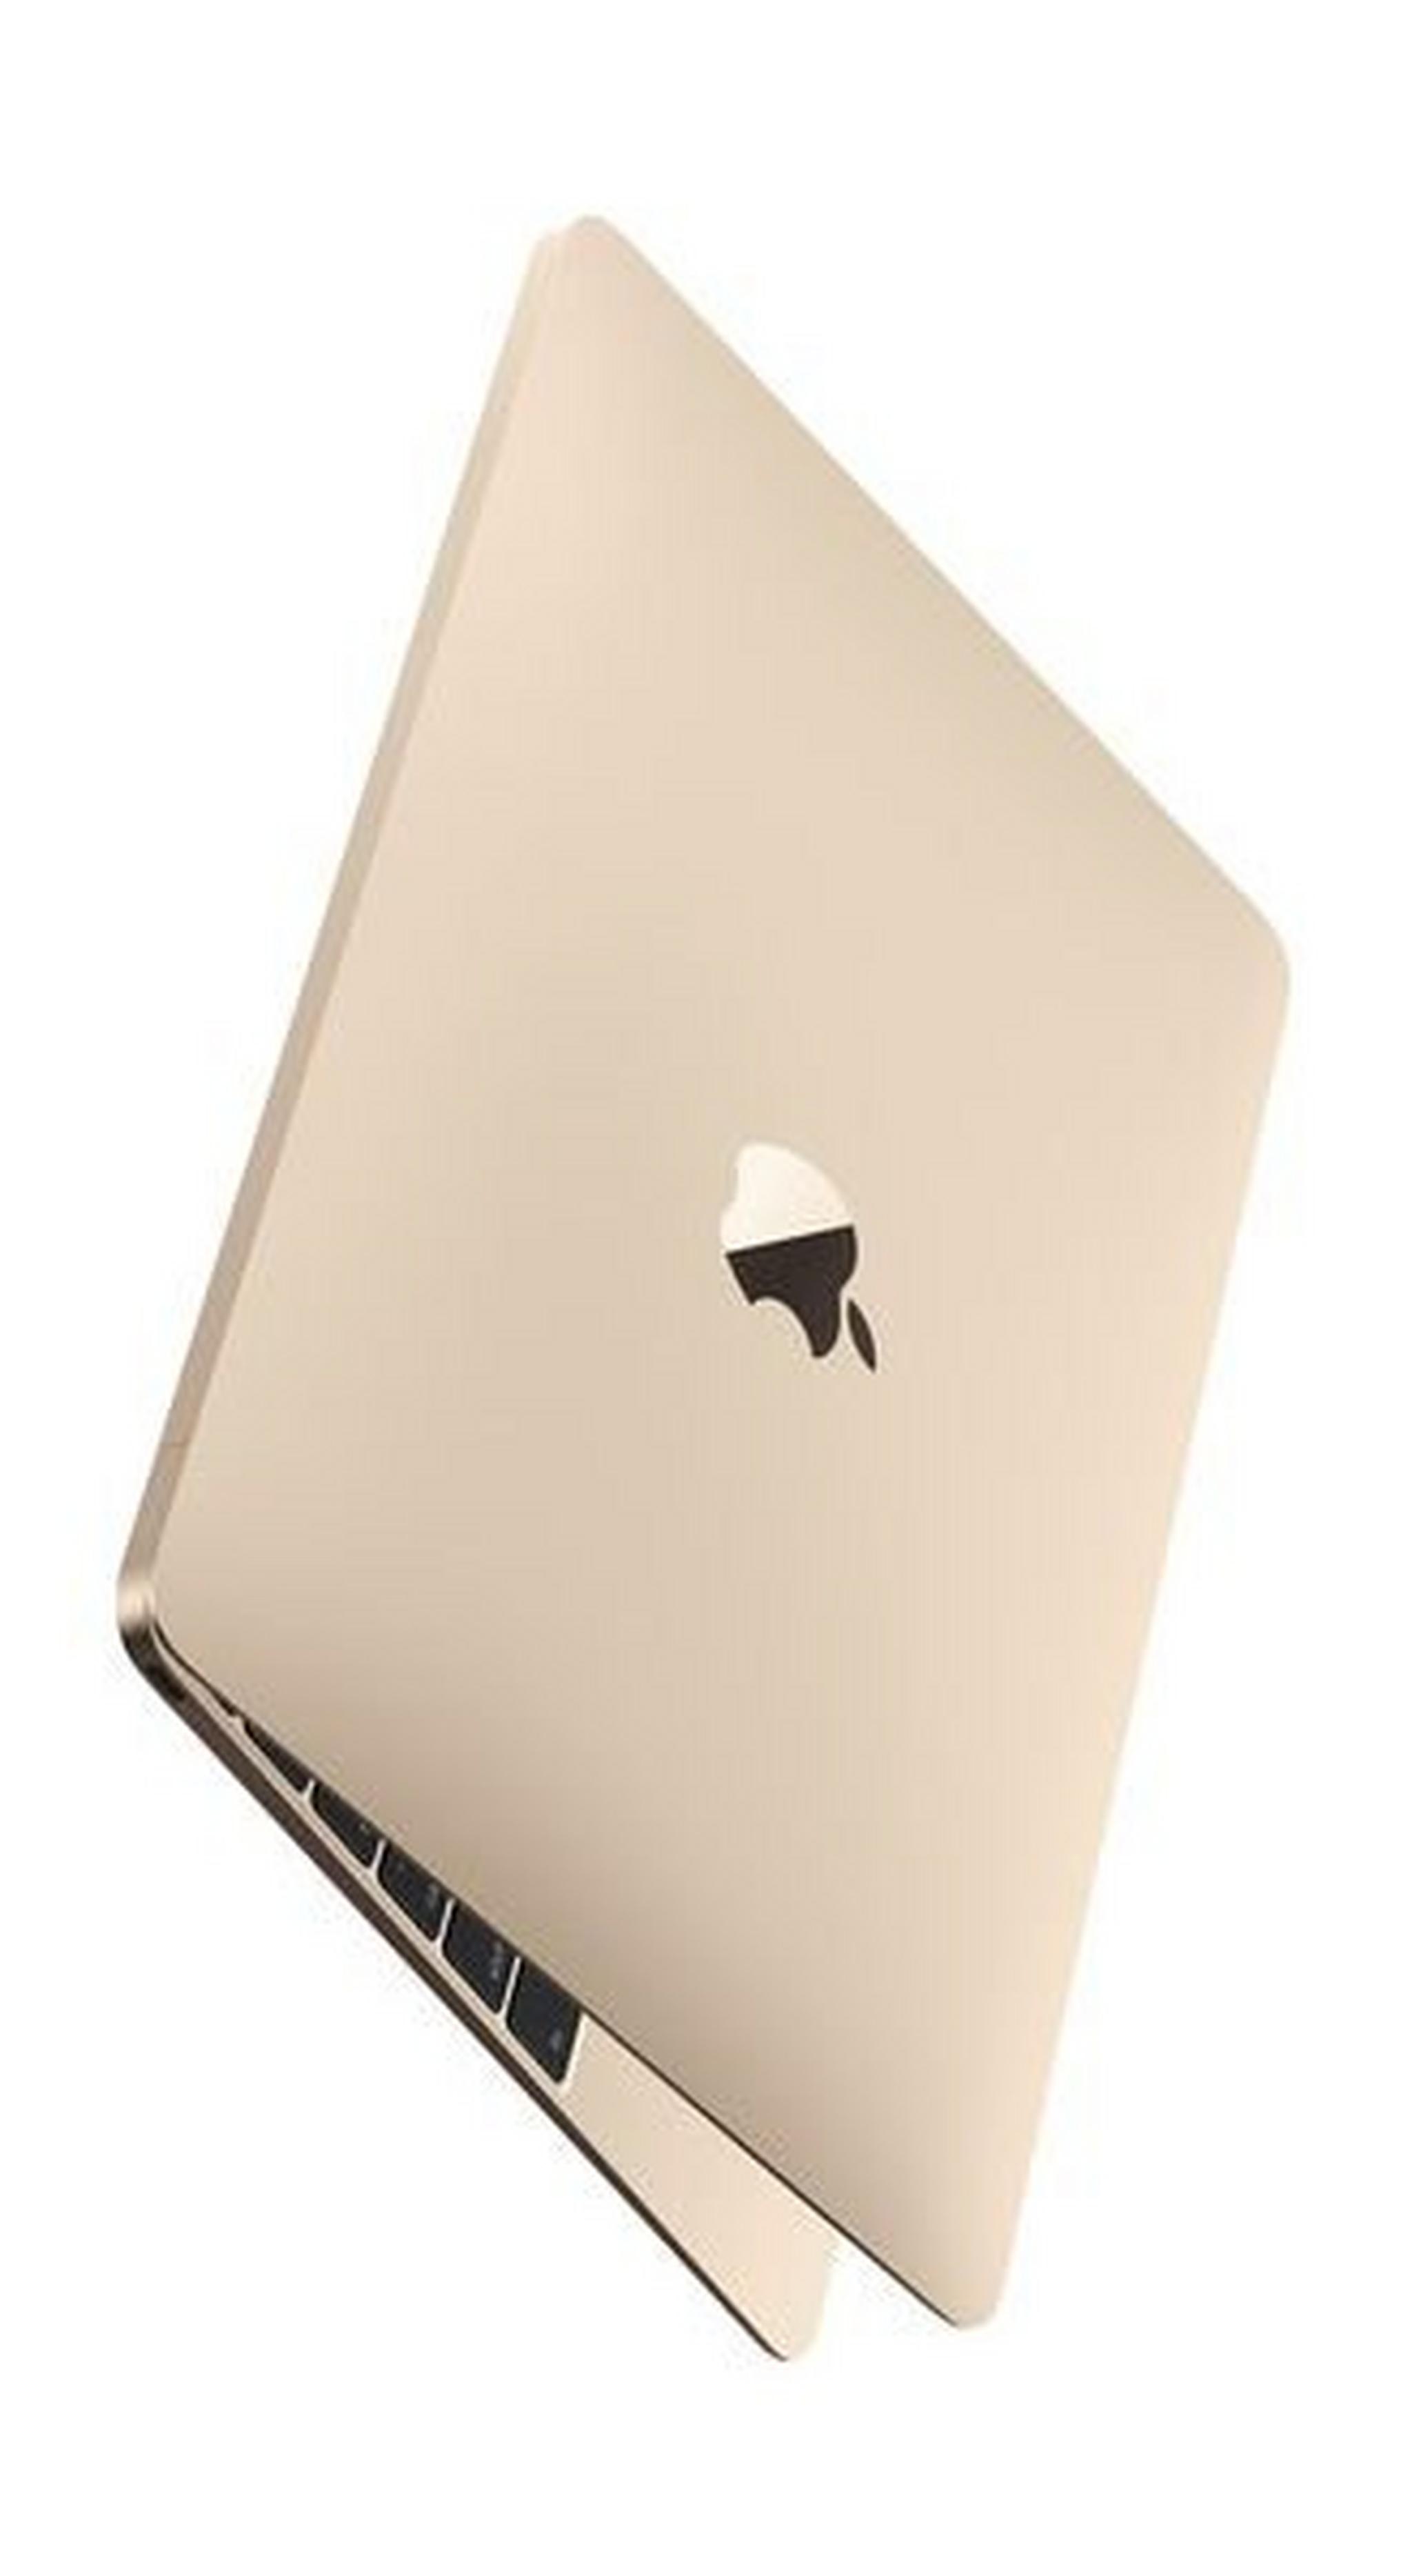 Apple MacBook 2017 Core-m3 8GB RAM 256GB SSD 12-inch Laptop (MNYK2AE/A) - Gold